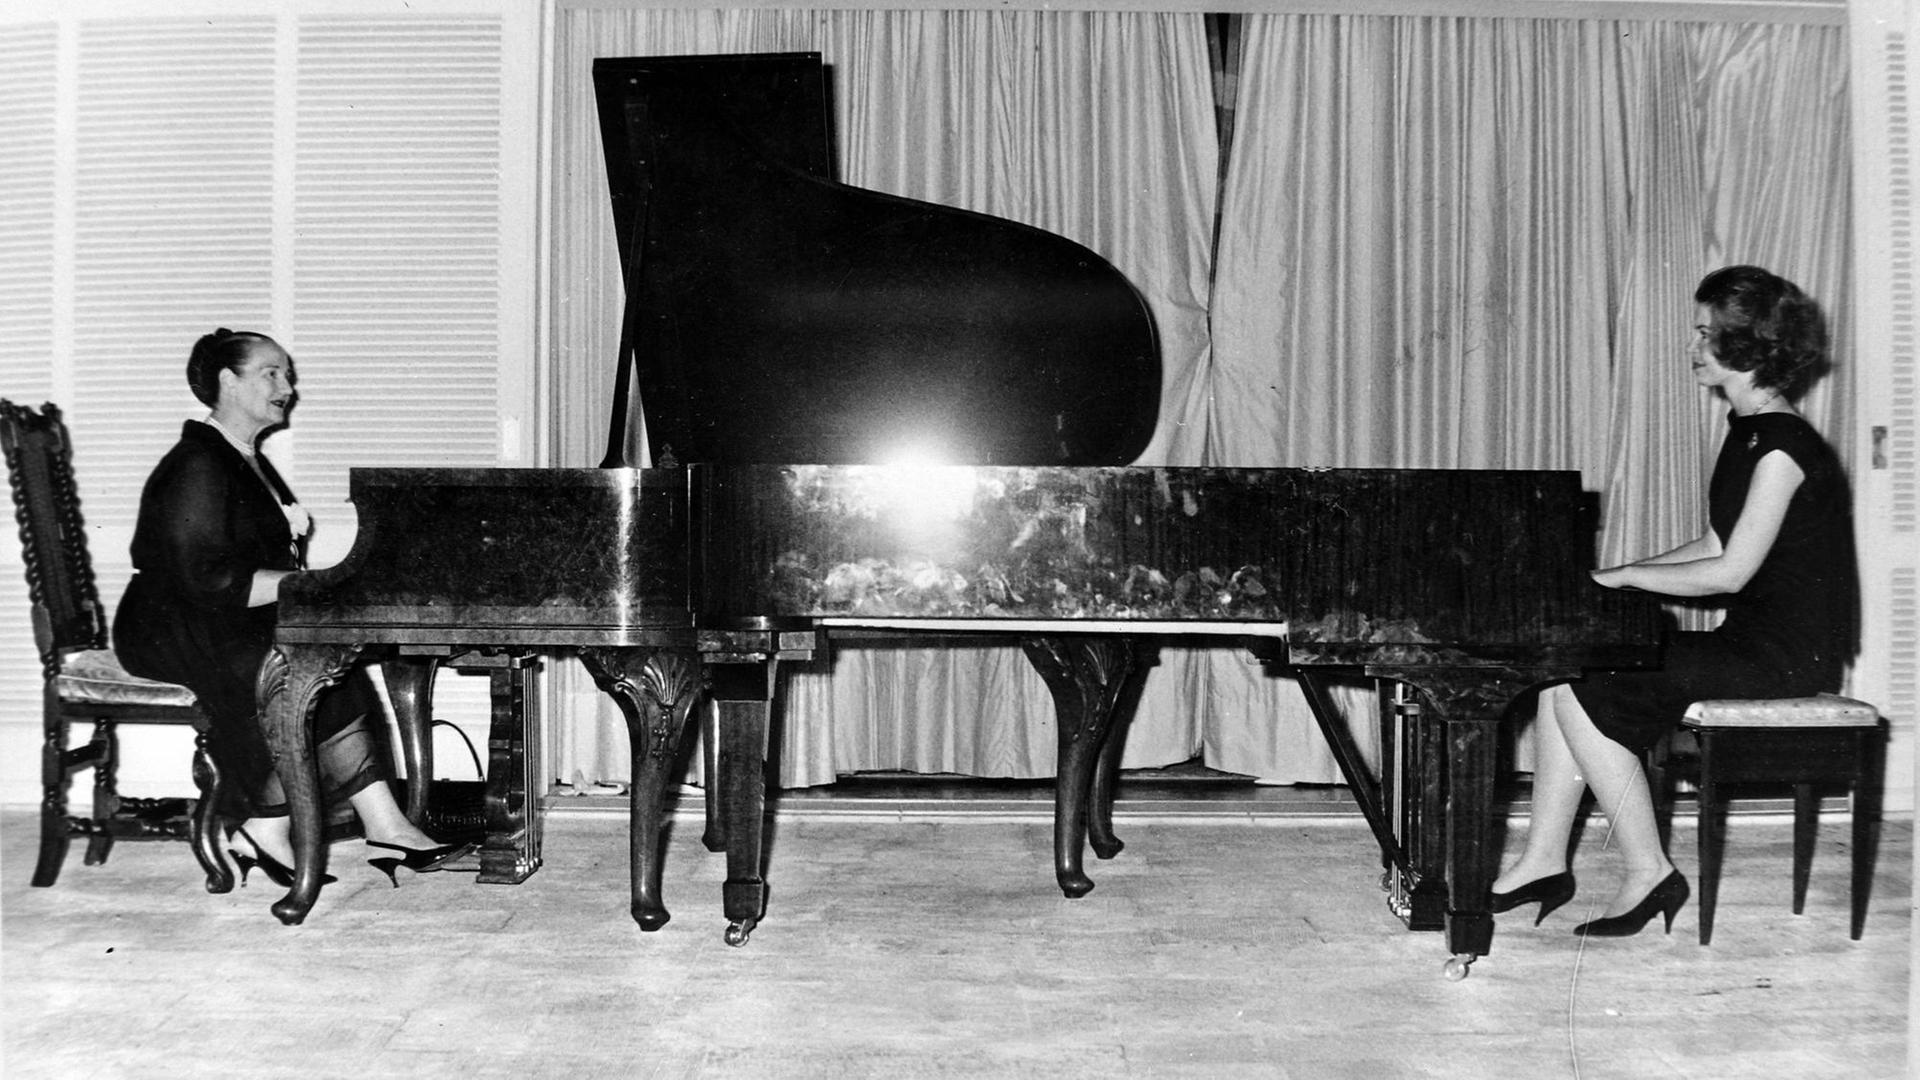 GINA BACHAUER WITH PRINCESS IRENE AT PIANO RECITAL IN ATHENS / ; 23 JULY 1964, Copyright: Topfoto PUBLICATIONxINxGERxSUIxAUTxONLY UnitedArchivesIPU481247